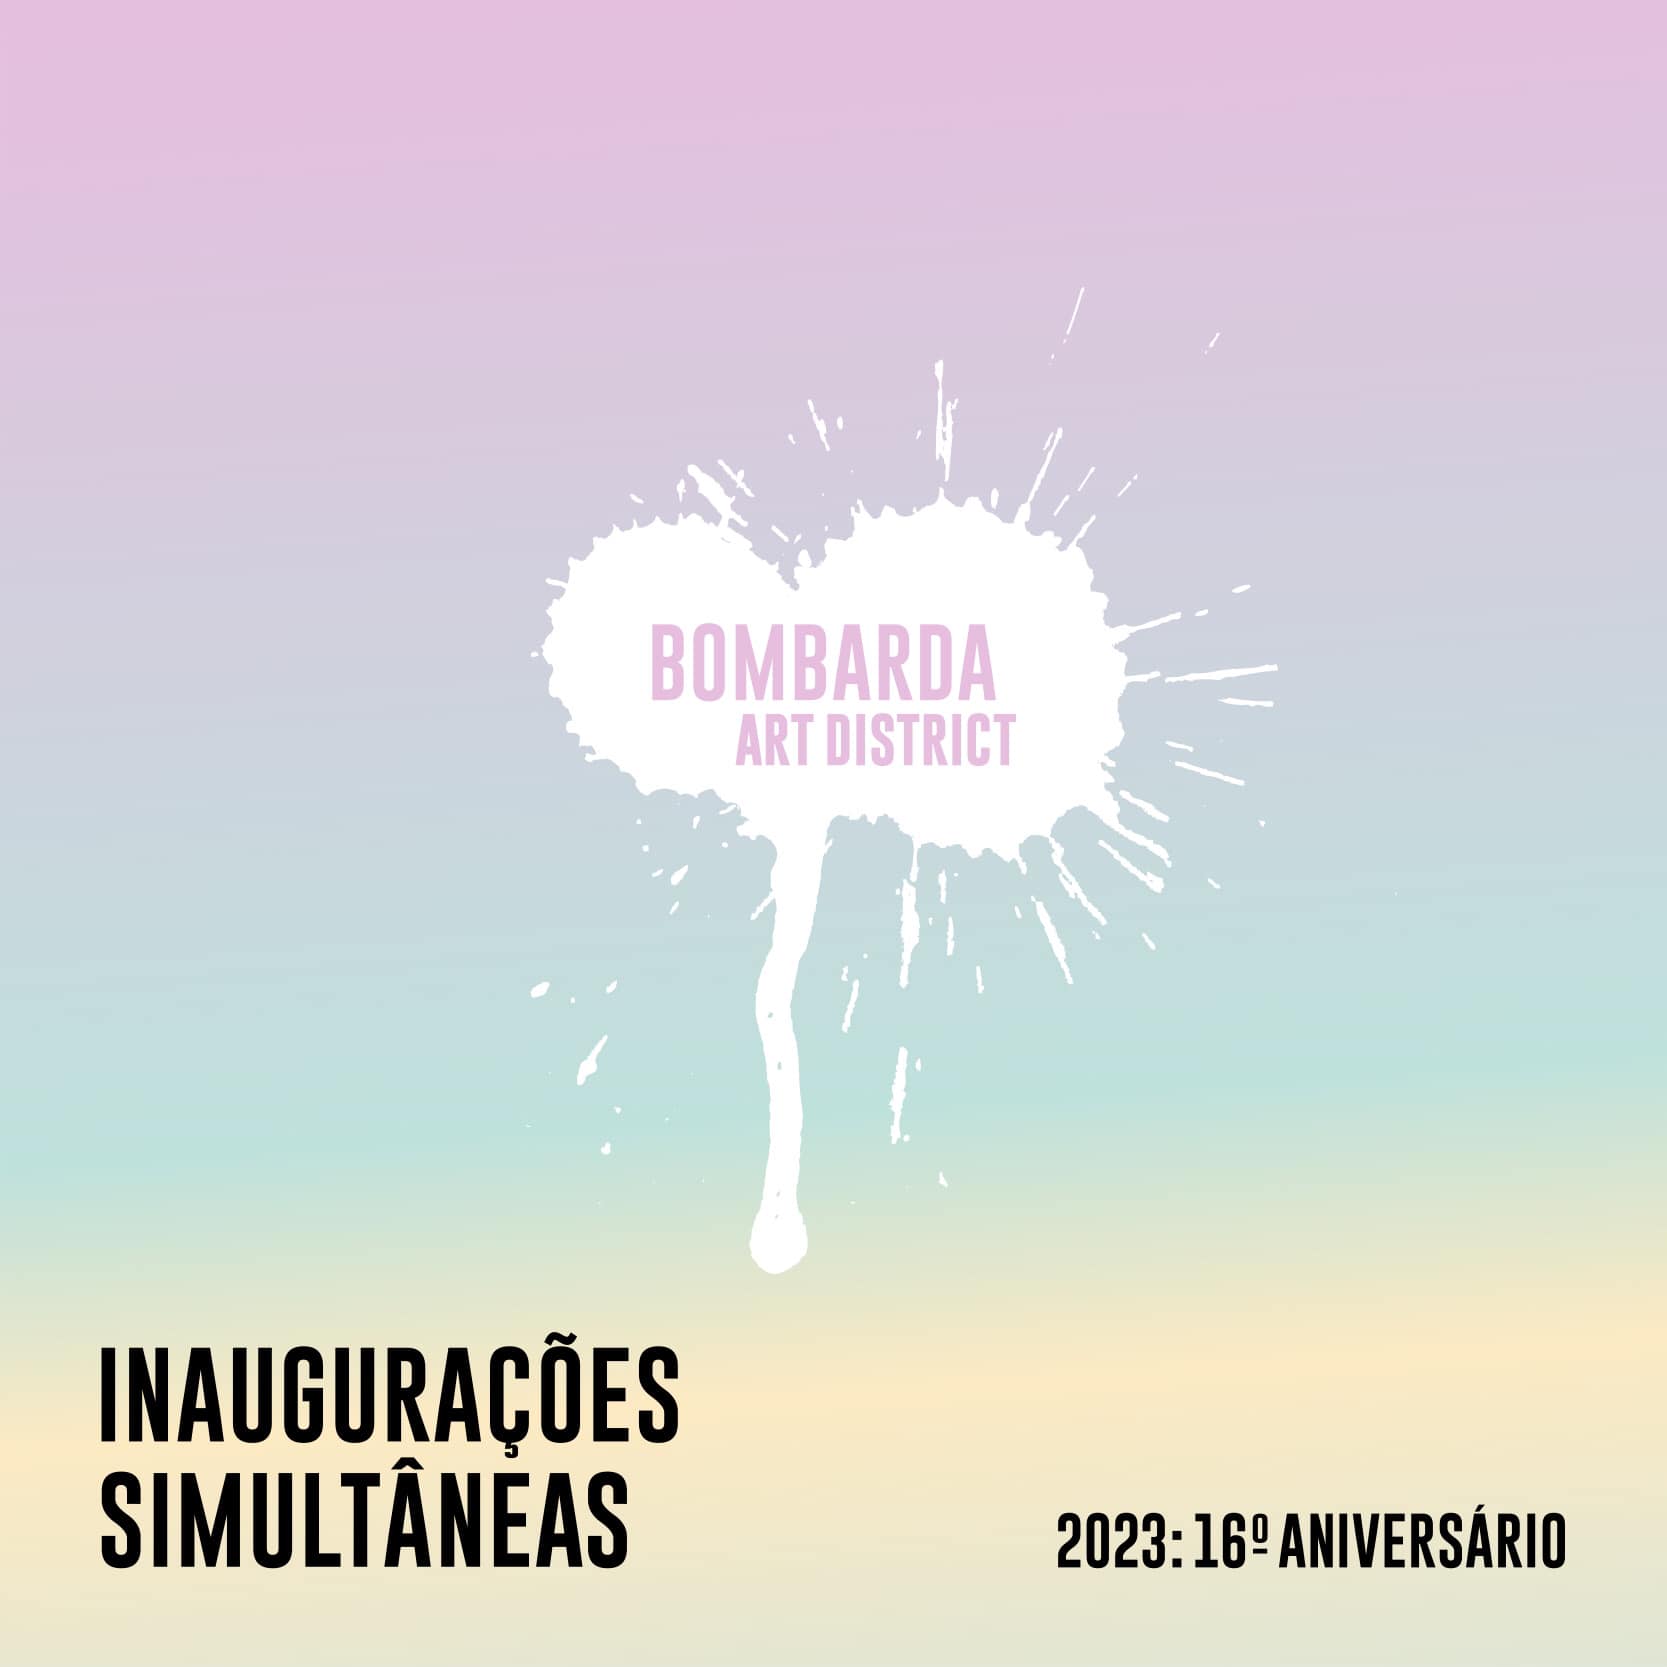 Inaugurações Simultâneas de Miguel Bombarda - Evento